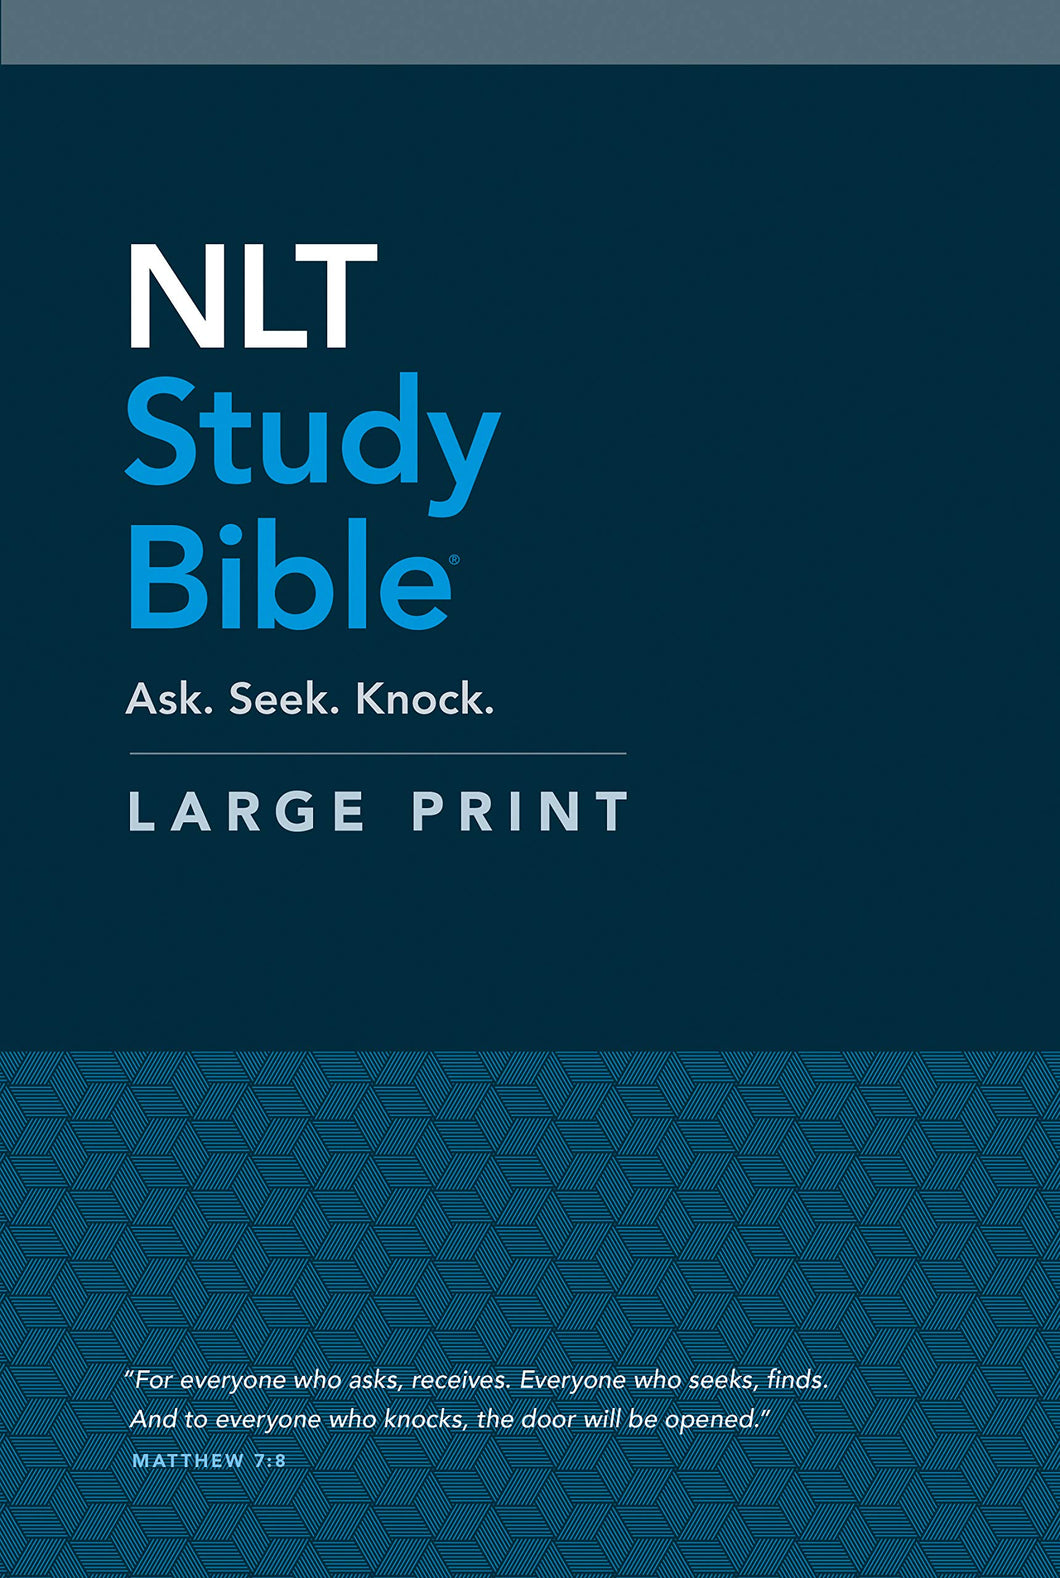 NLT Study Bible Large Print (Hardcover)